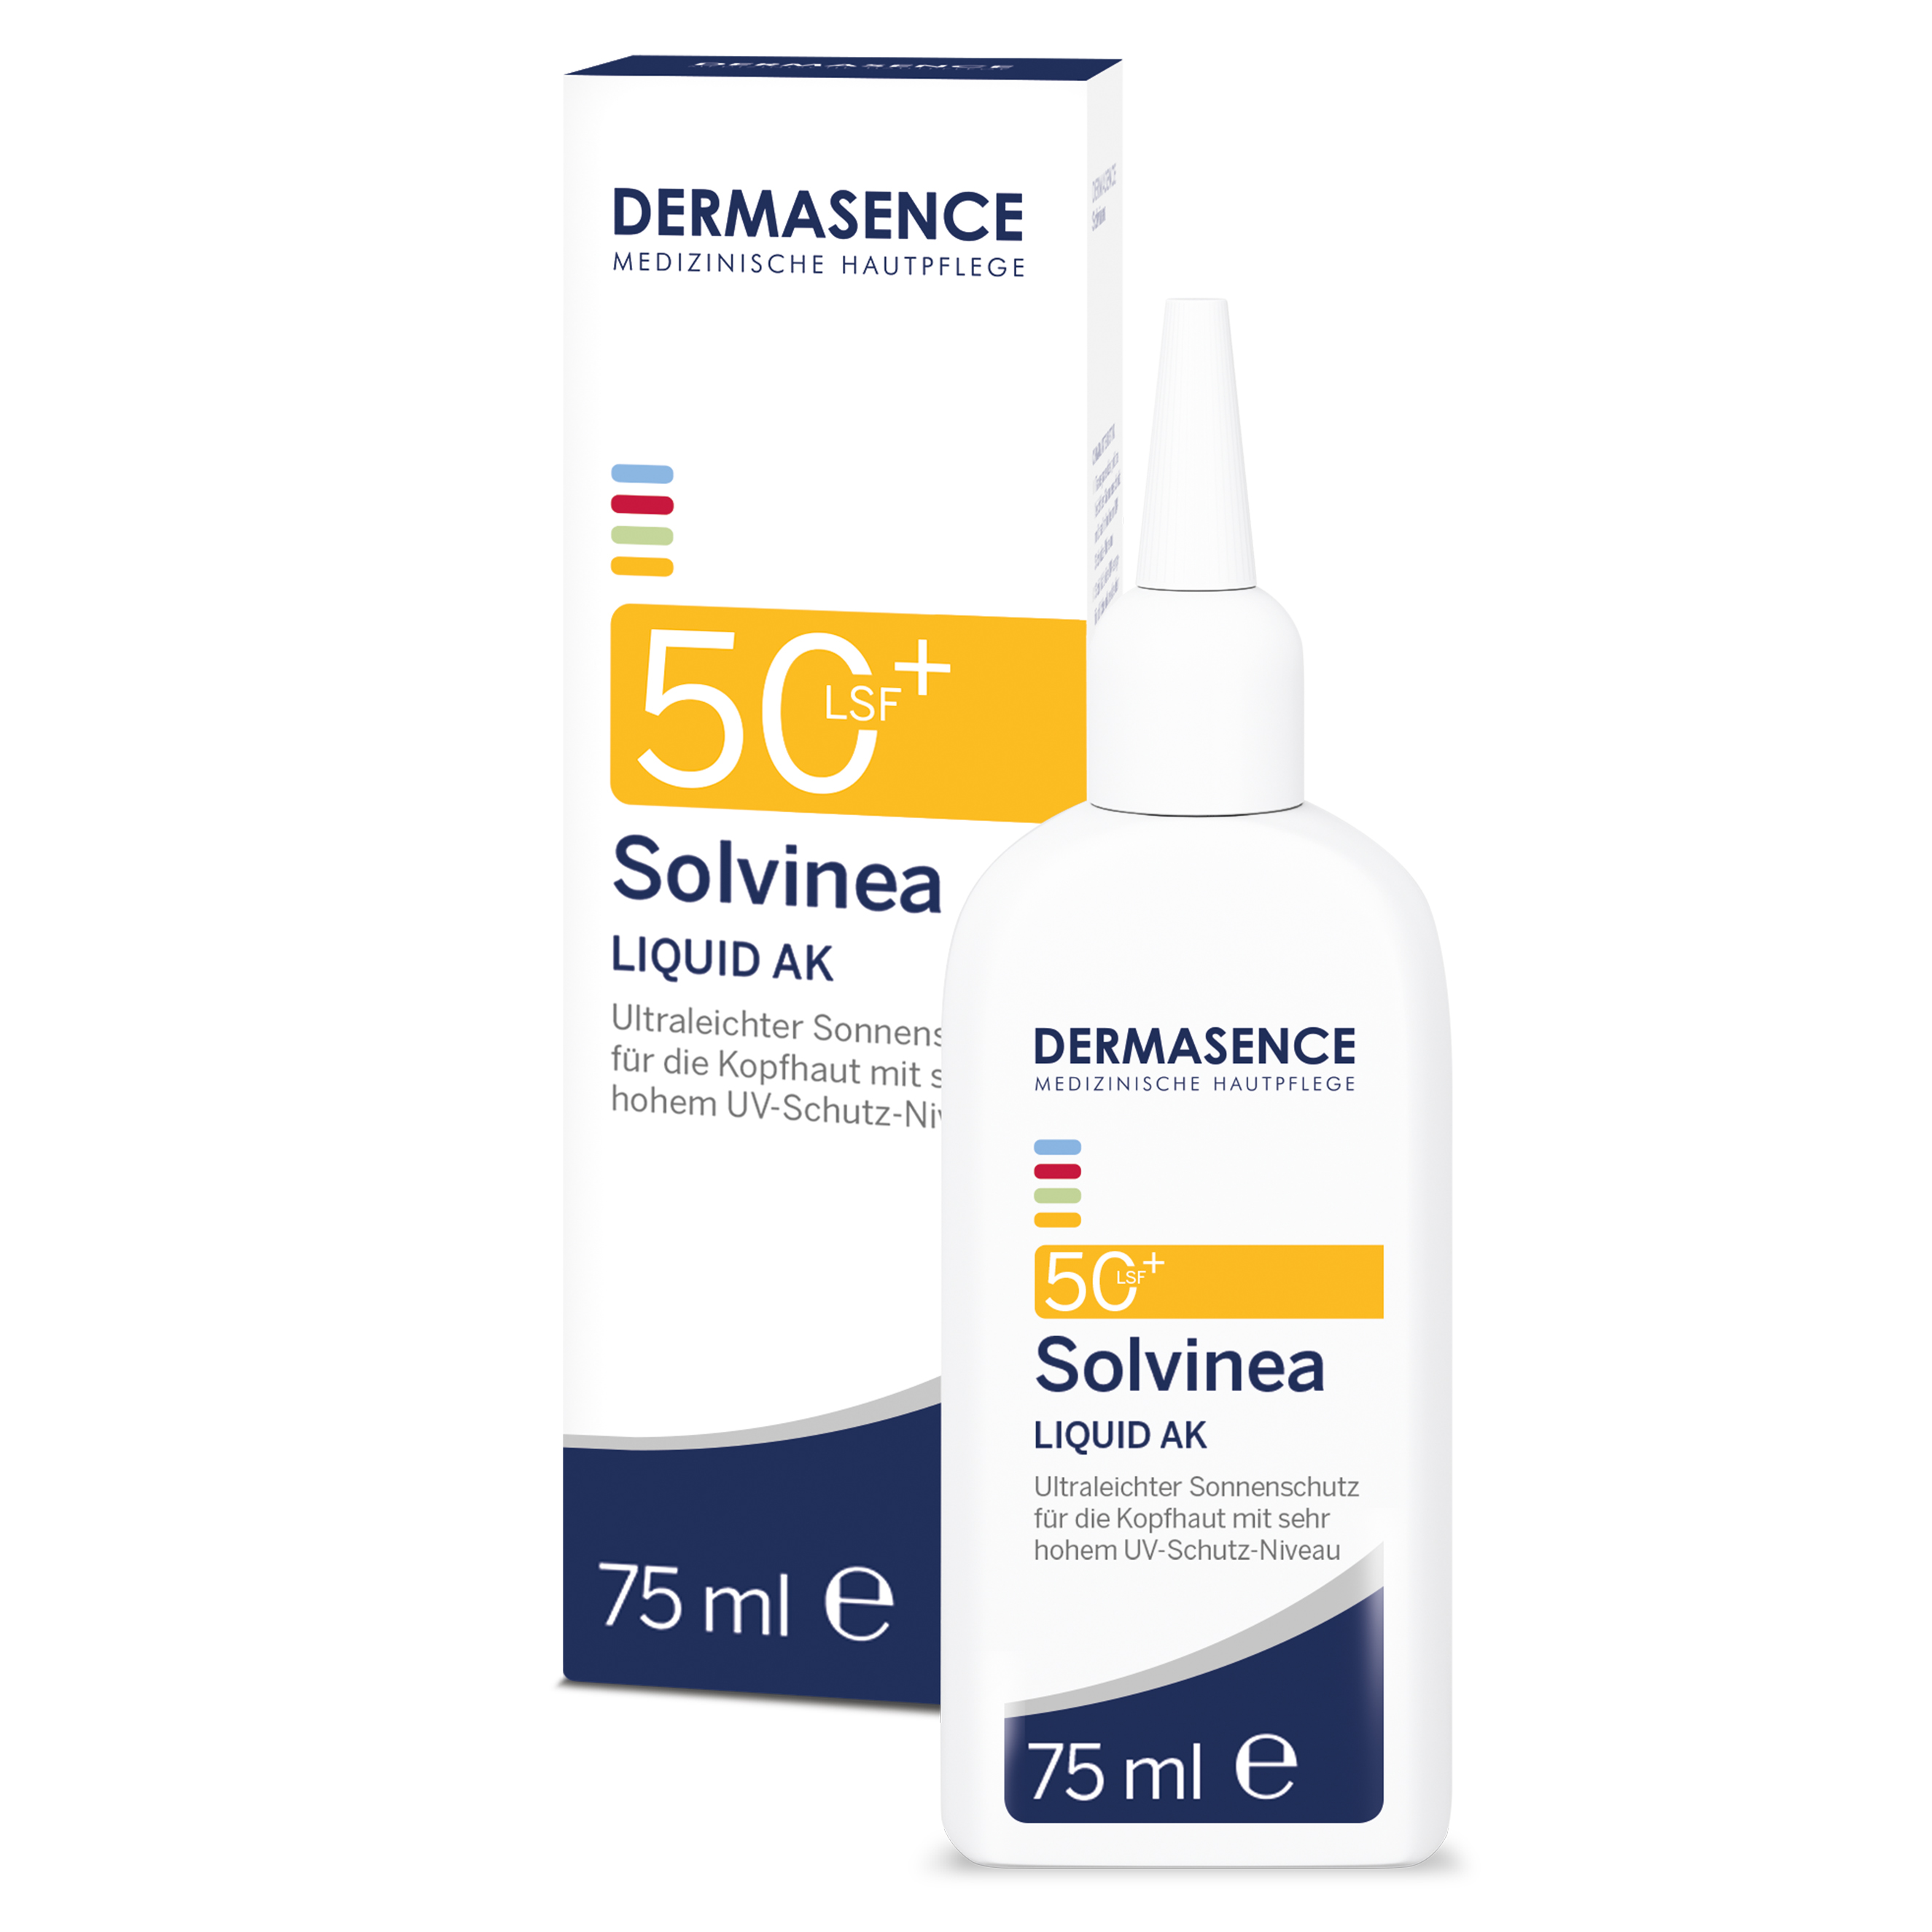 Dermasence Solvinea Liquid Ak Lsf 50+ (75 ml)